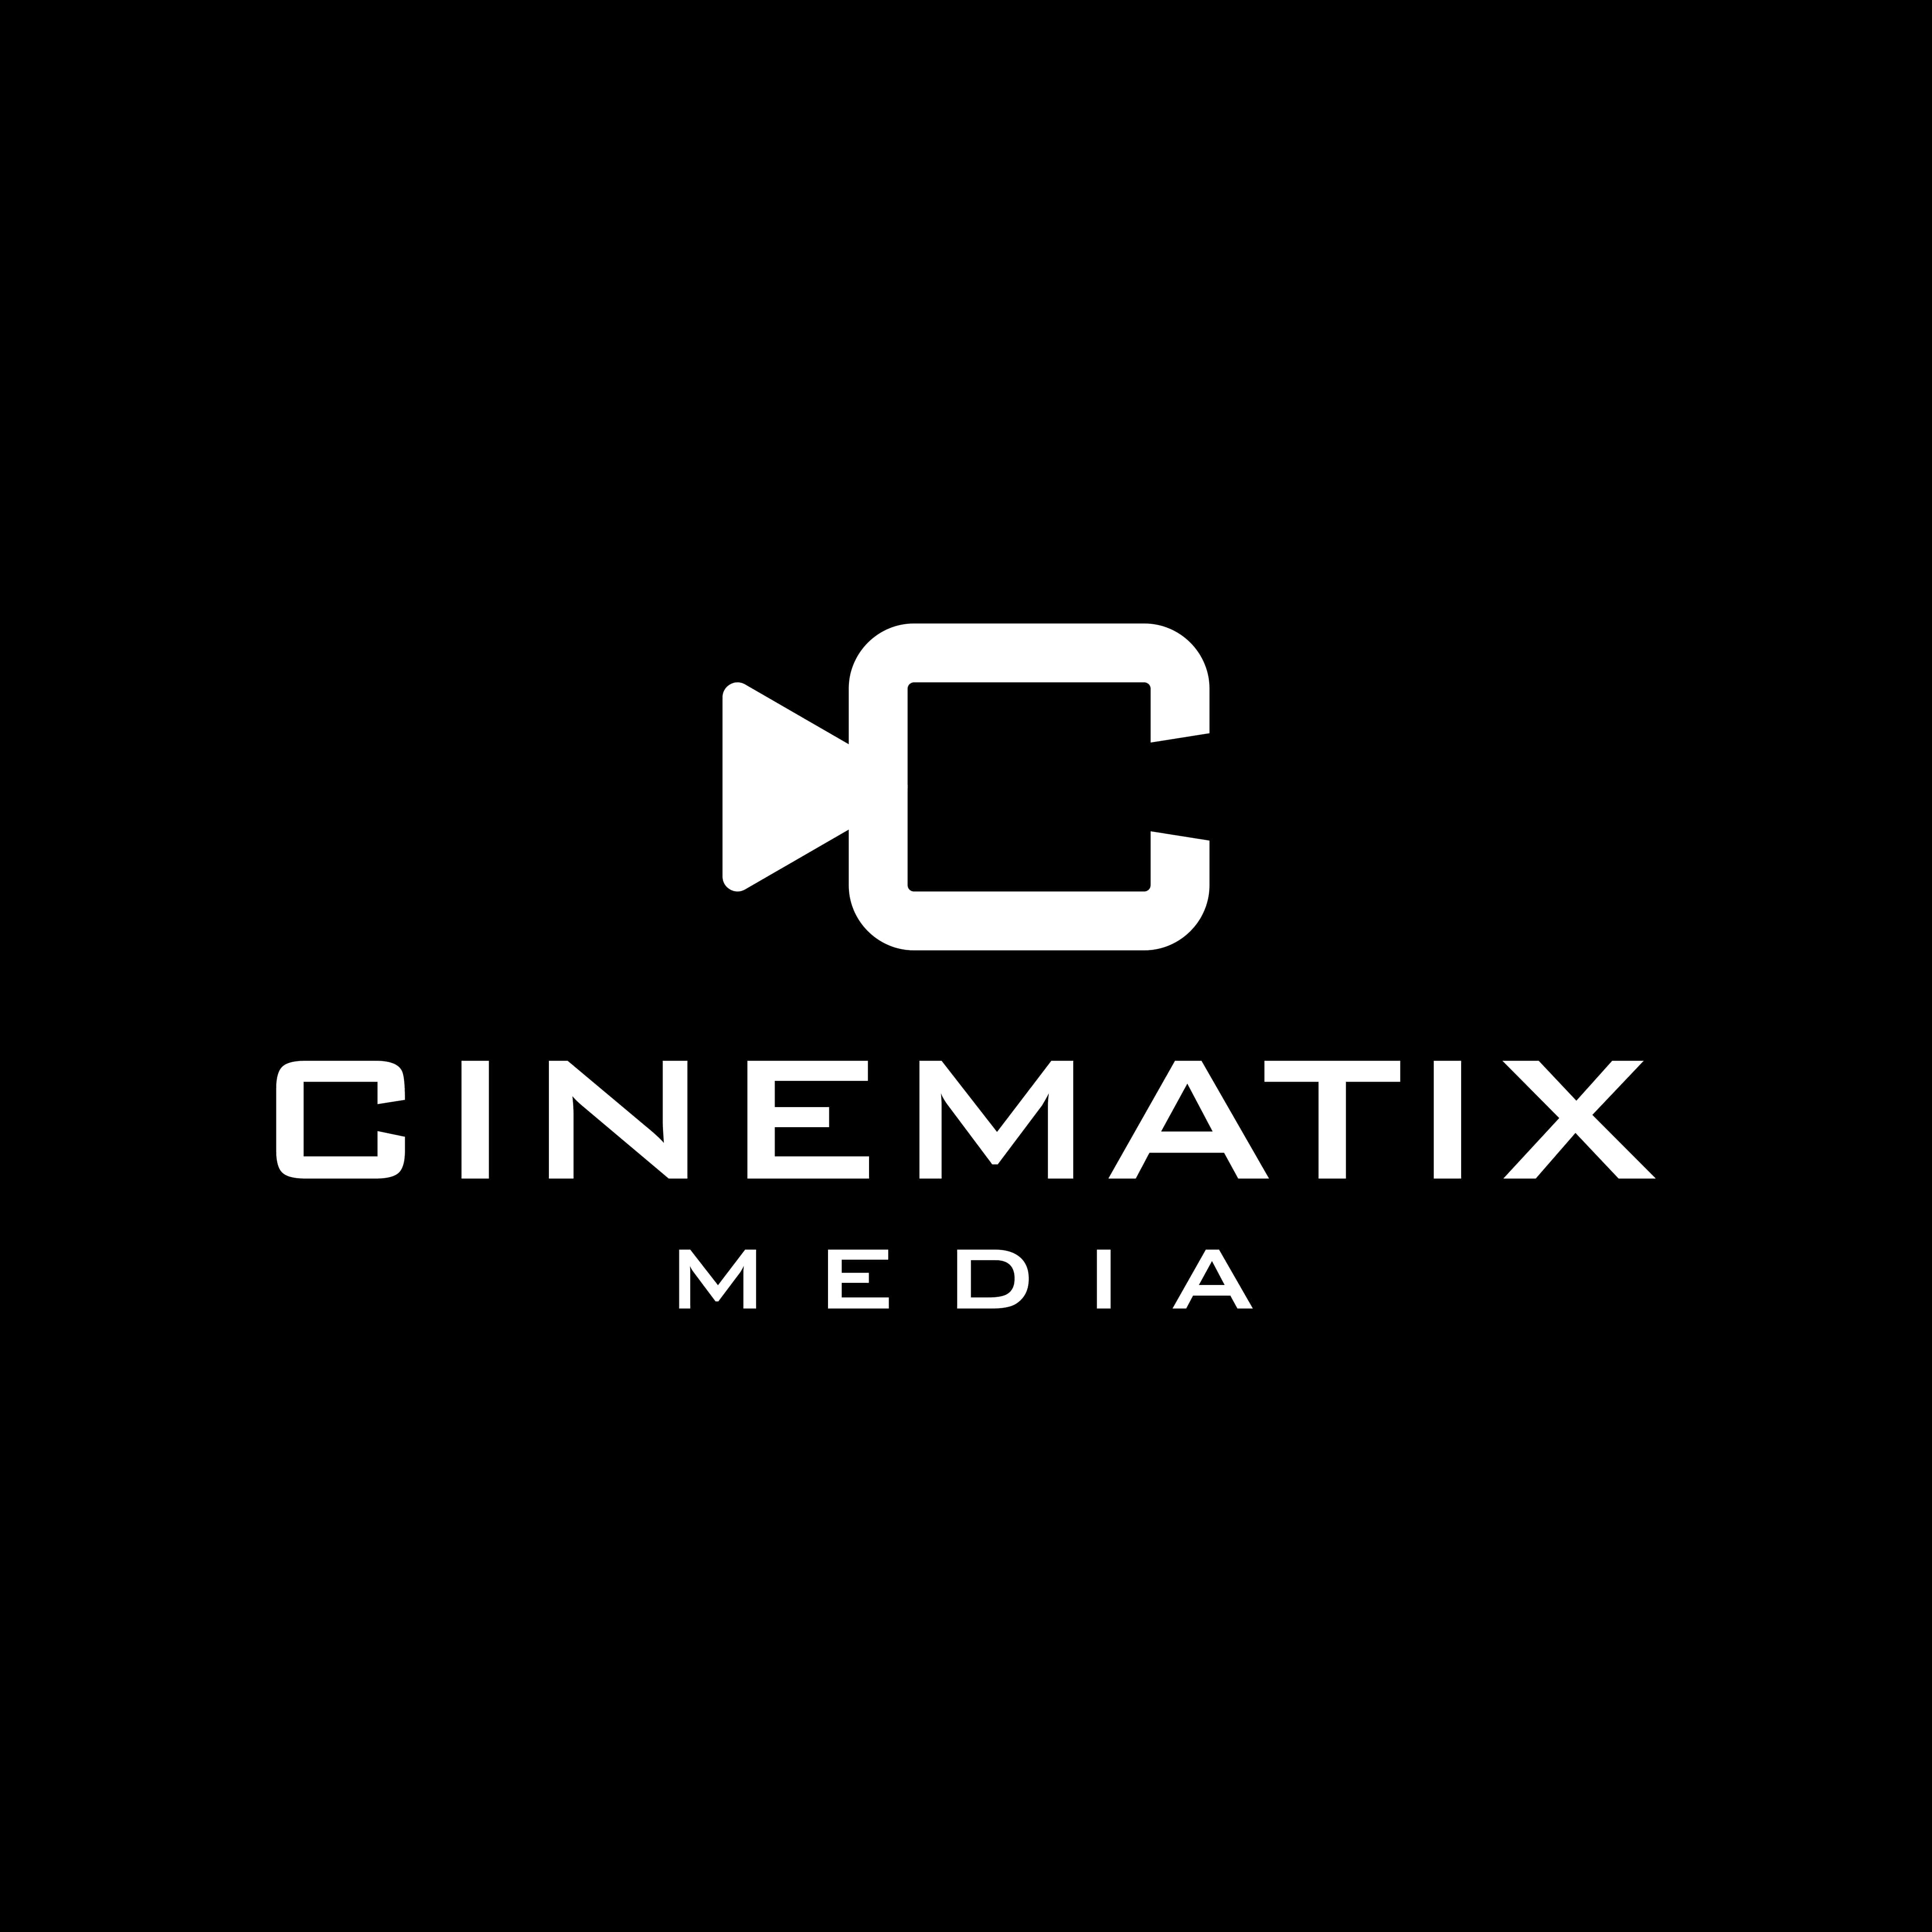 Cinematix-Media-2.jpg